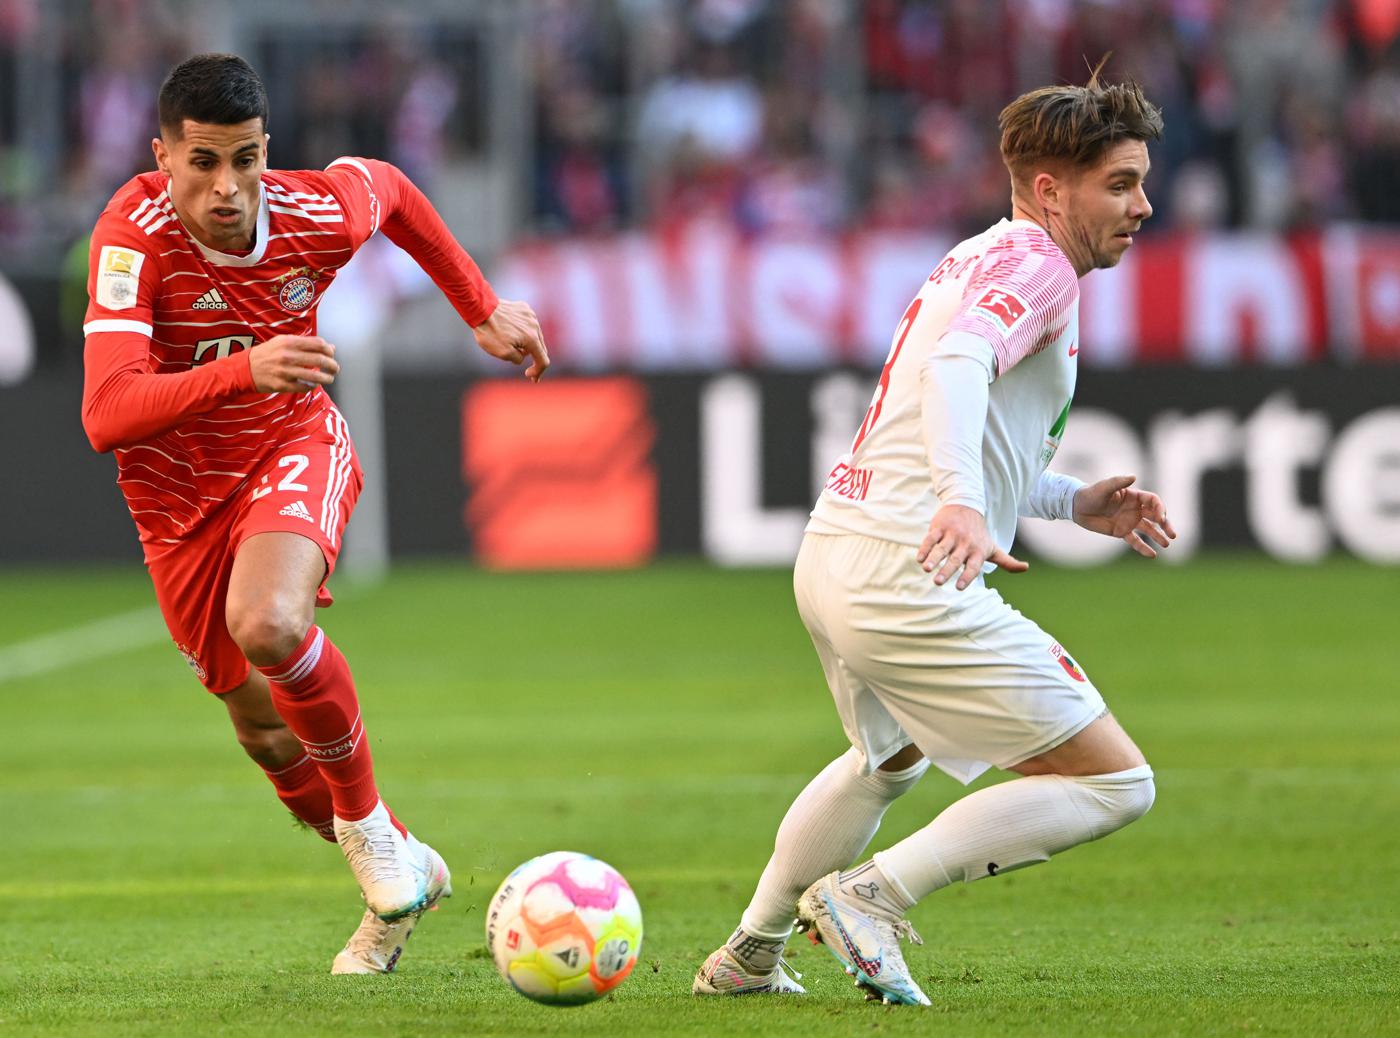 Bayern - Augsburg - 5:3. German Championship, round 24. Match Review, Statistics